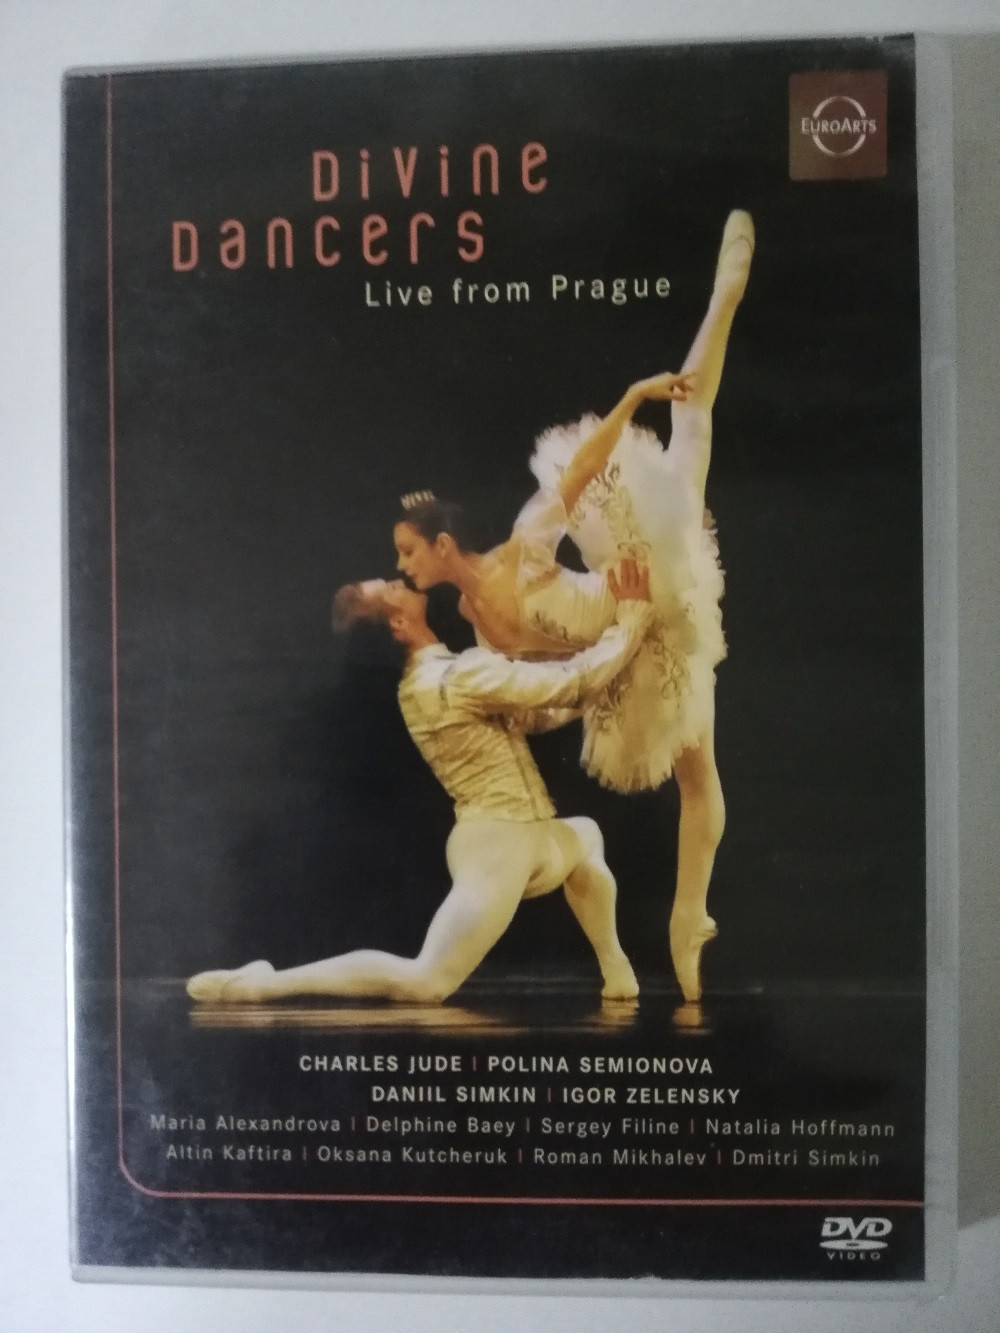 Imagen DVD DIVINE DANCERS - JUDE/SEMIONOVA/SIMKIN/ZELENSKY 1